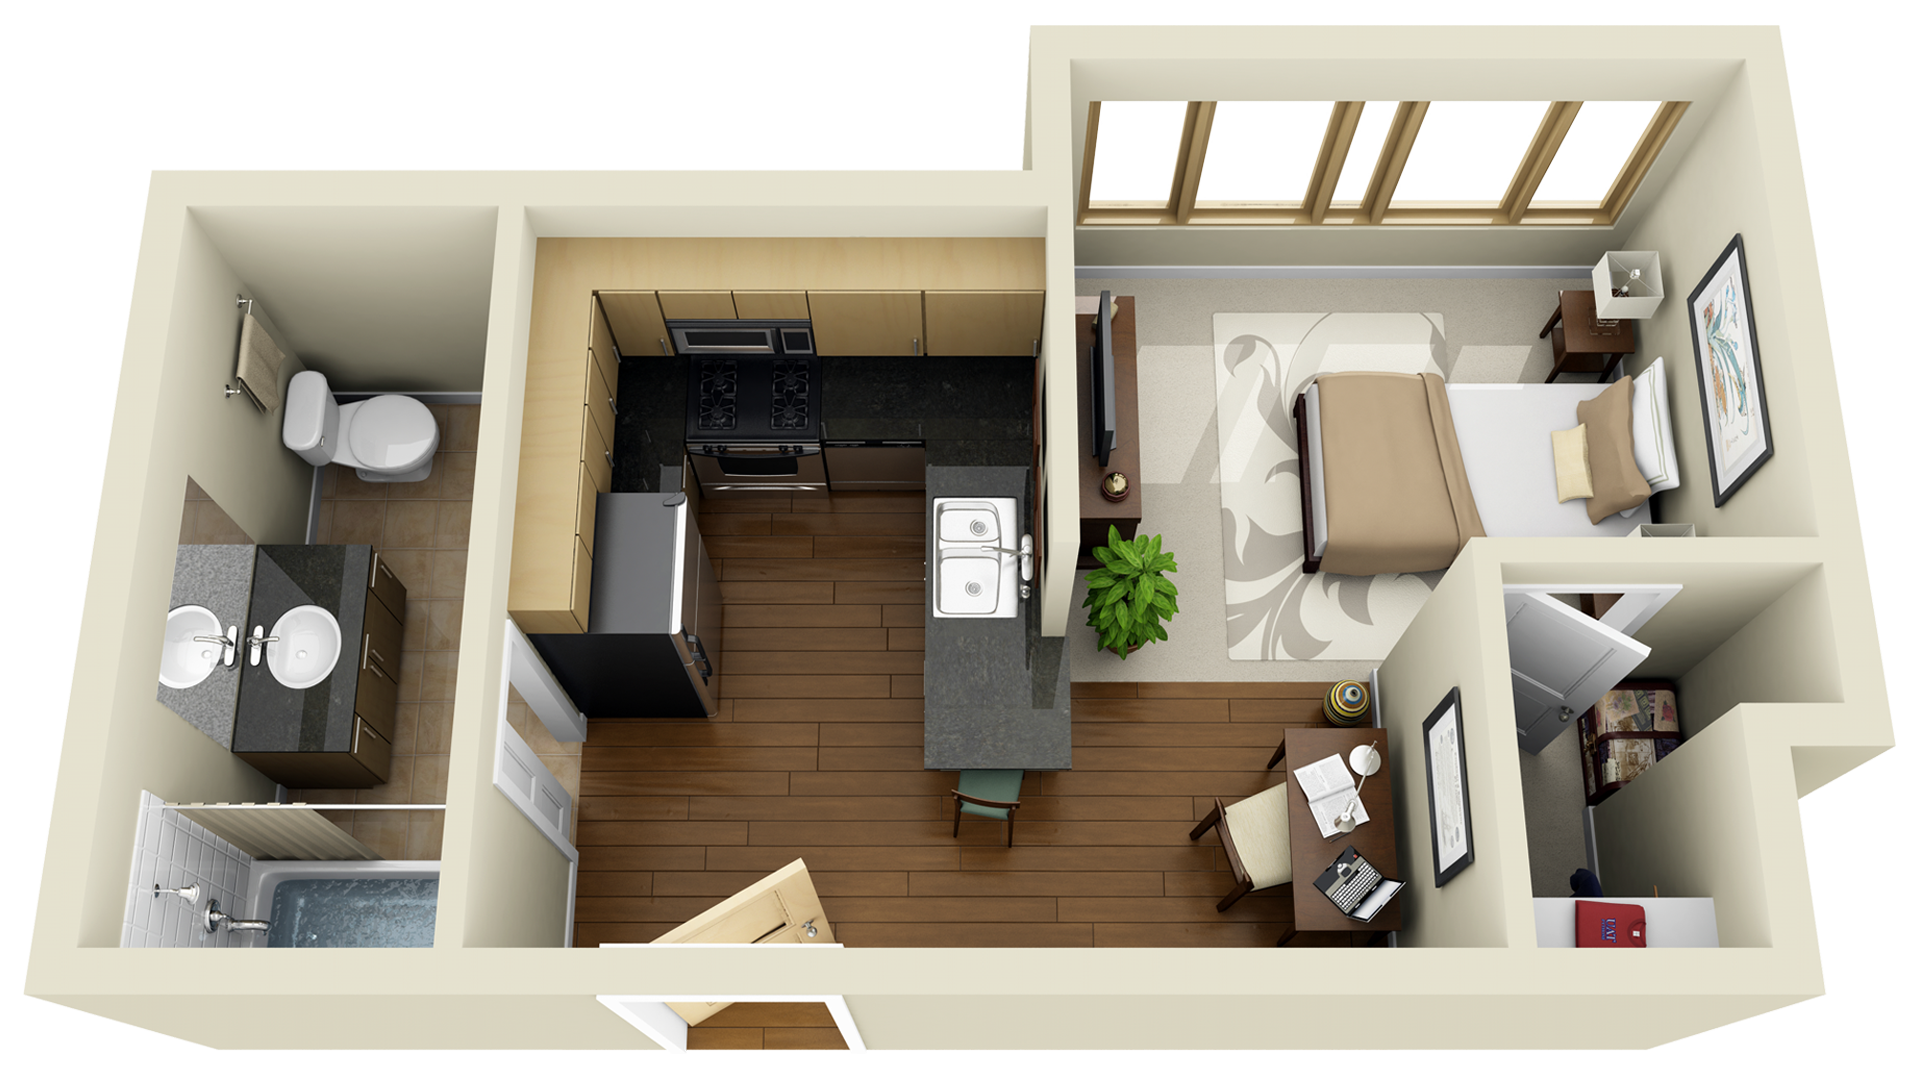 Blue Square Apartments: 1-Bedroom/Studio, Housing Services